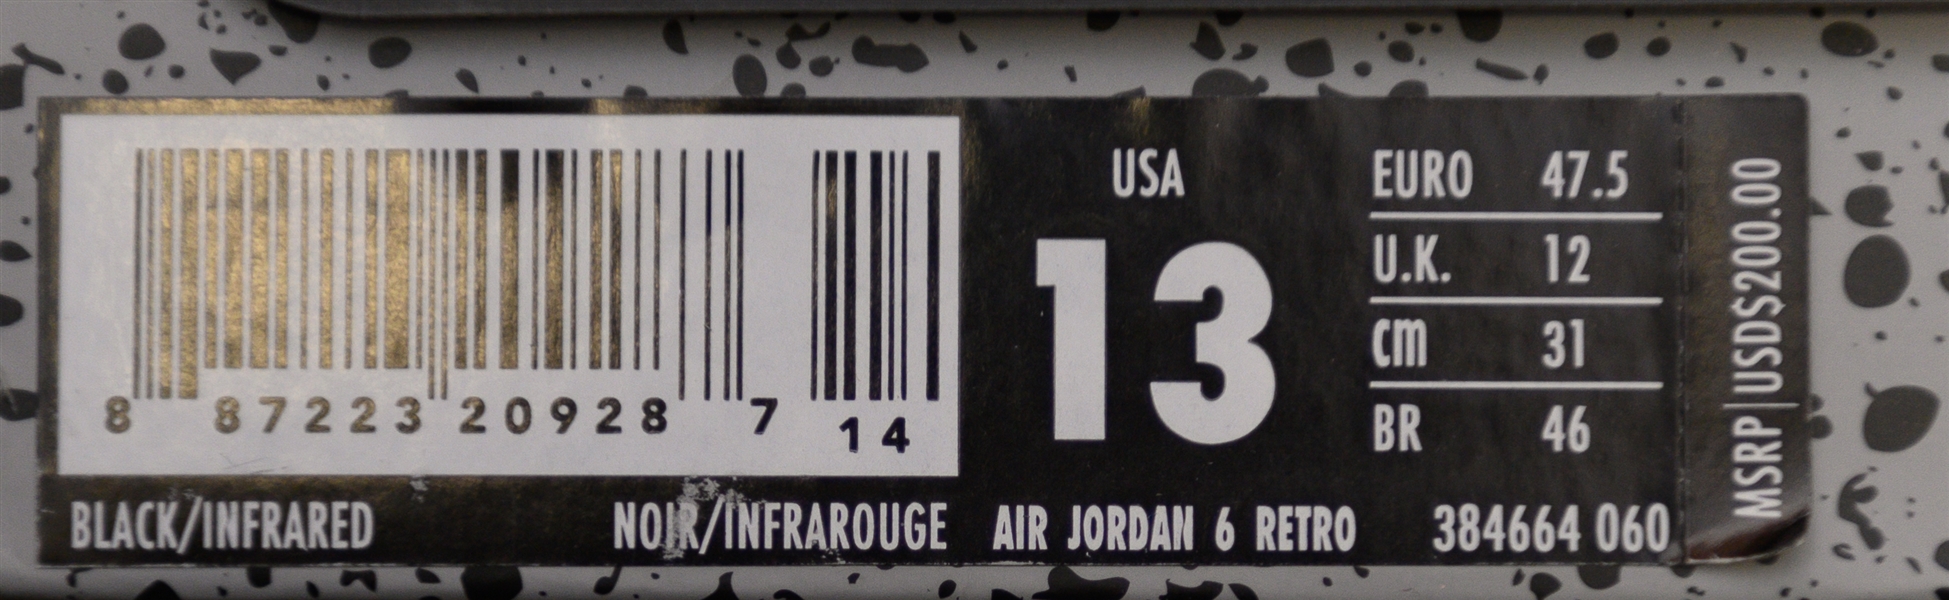 2018 Nike Air Jordan 6 Retro Black Infrared - Size 13 (Jordan's Actual Size)